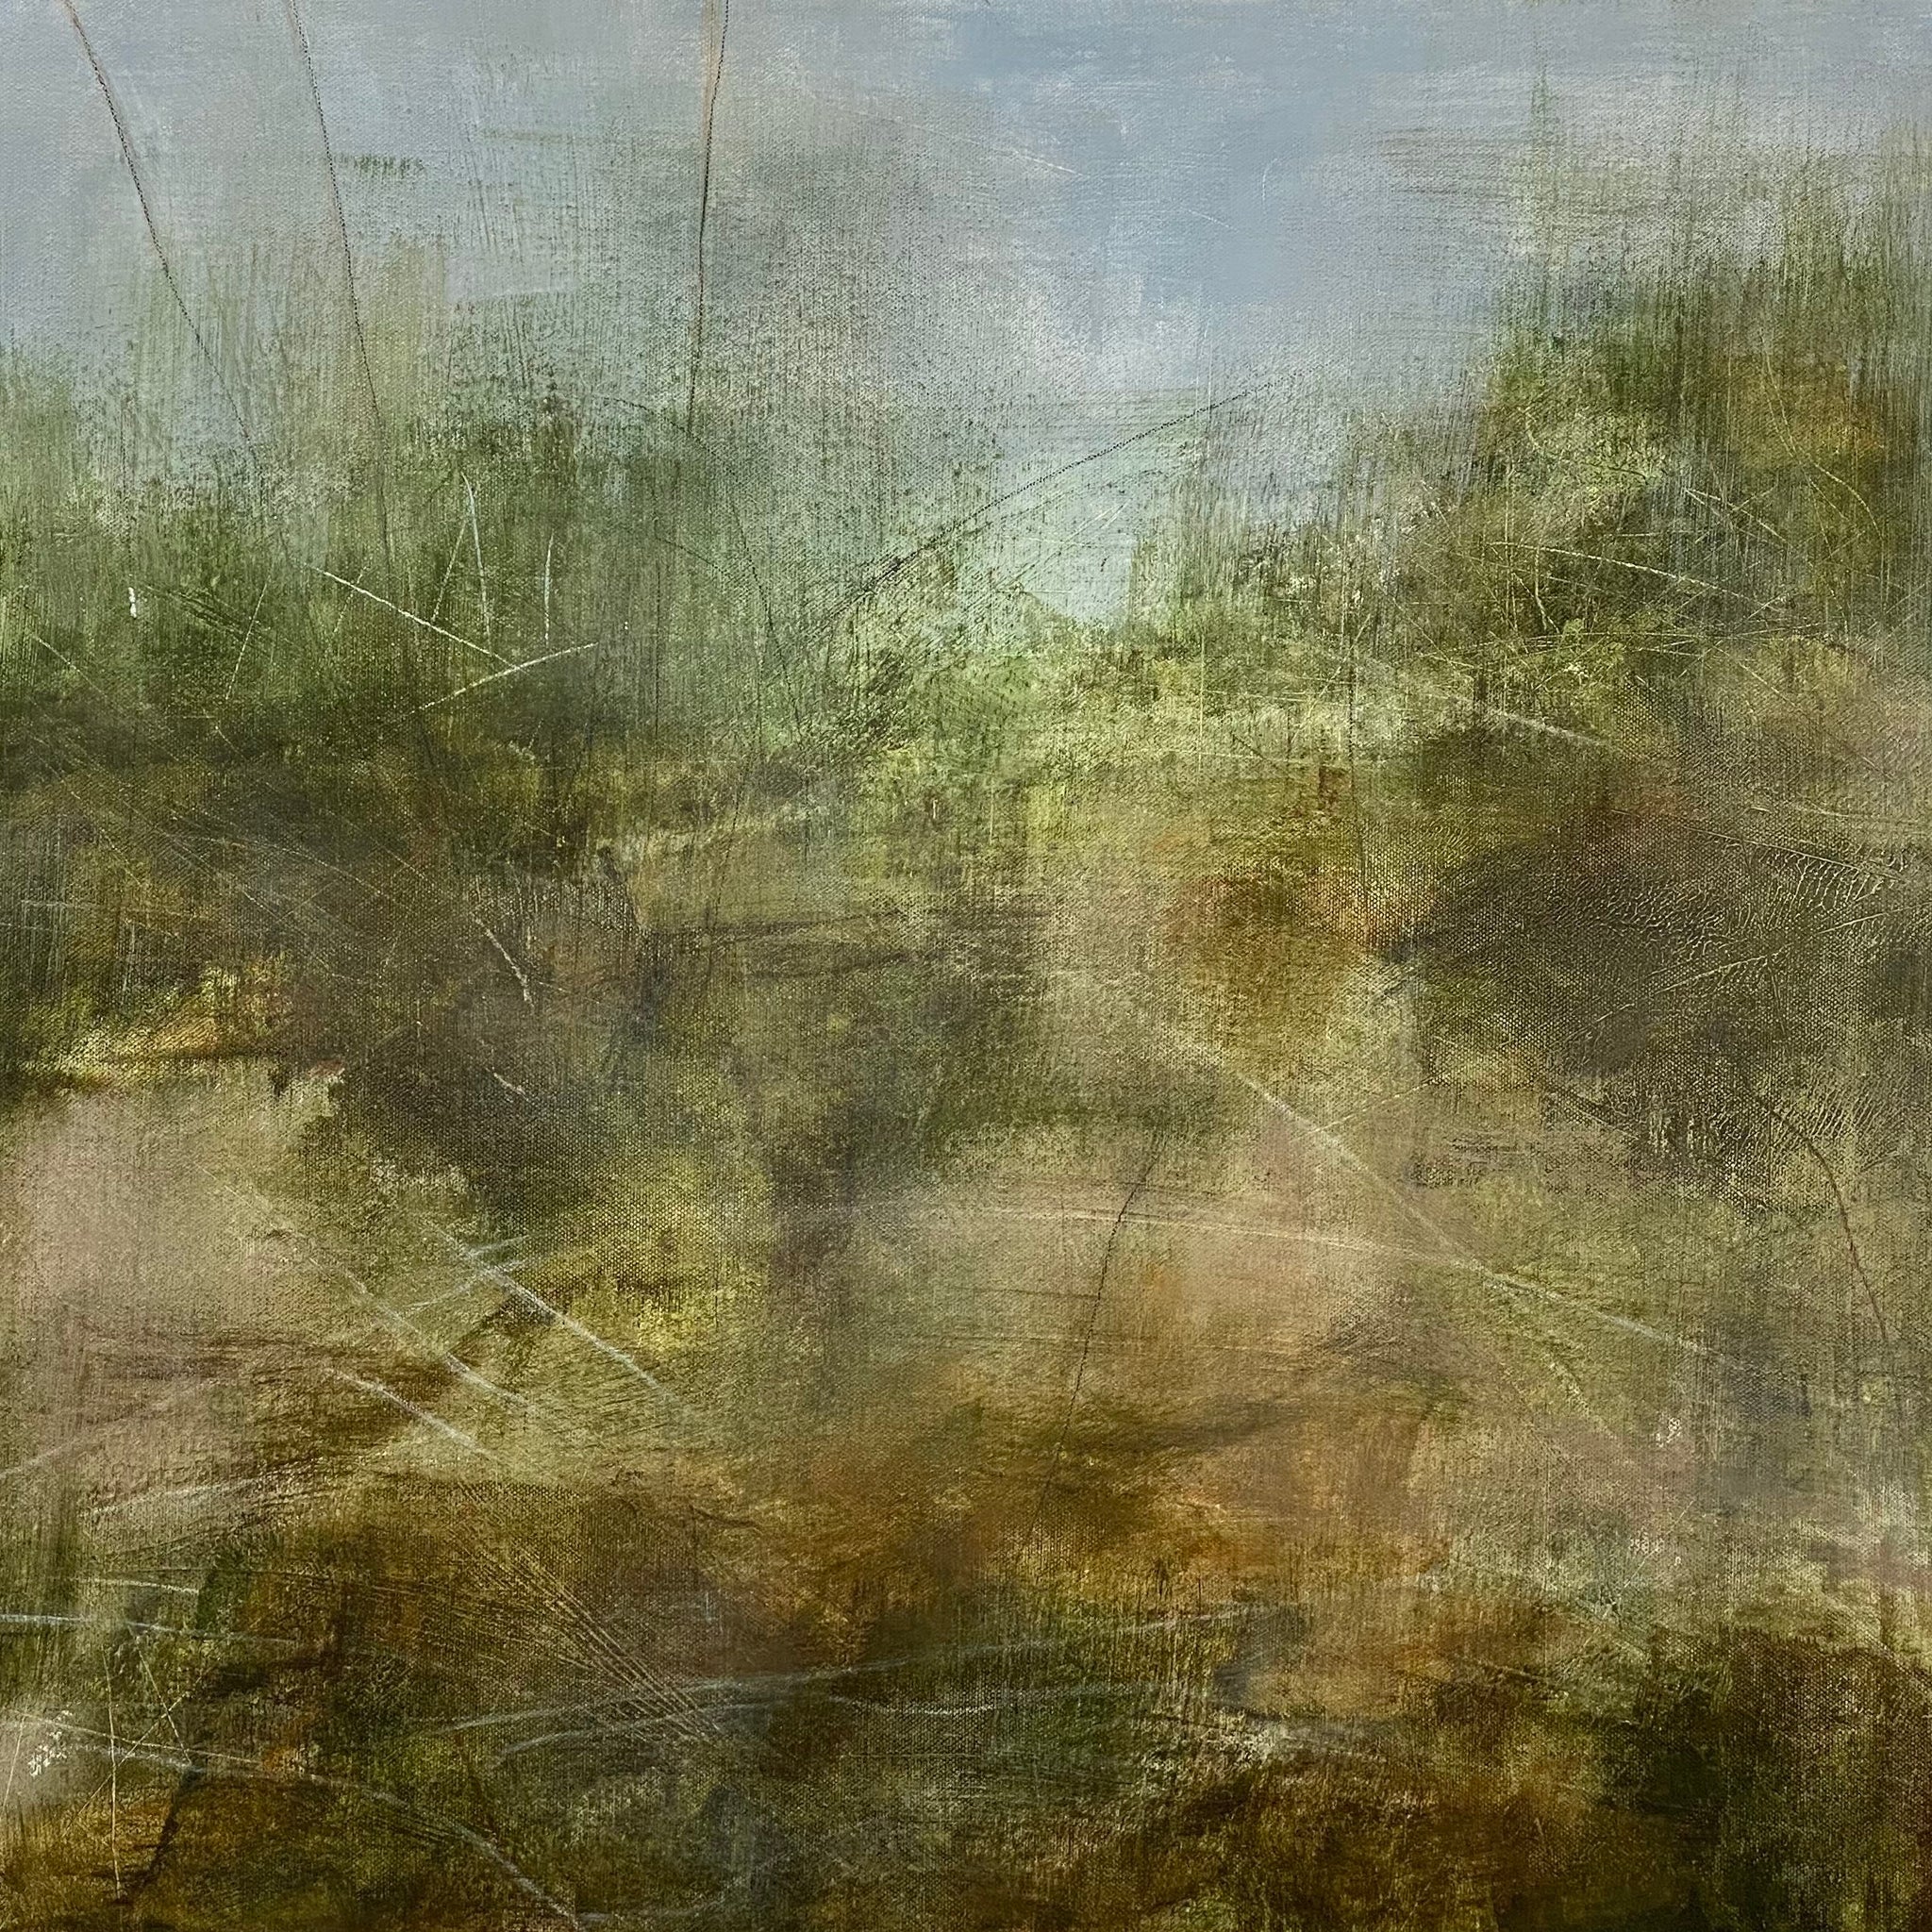 Juanita Bellavance, Riverbank terrain, From the Chestatee River portfolio, 2021, Acrylic on canvas, 24 x 24 inches.